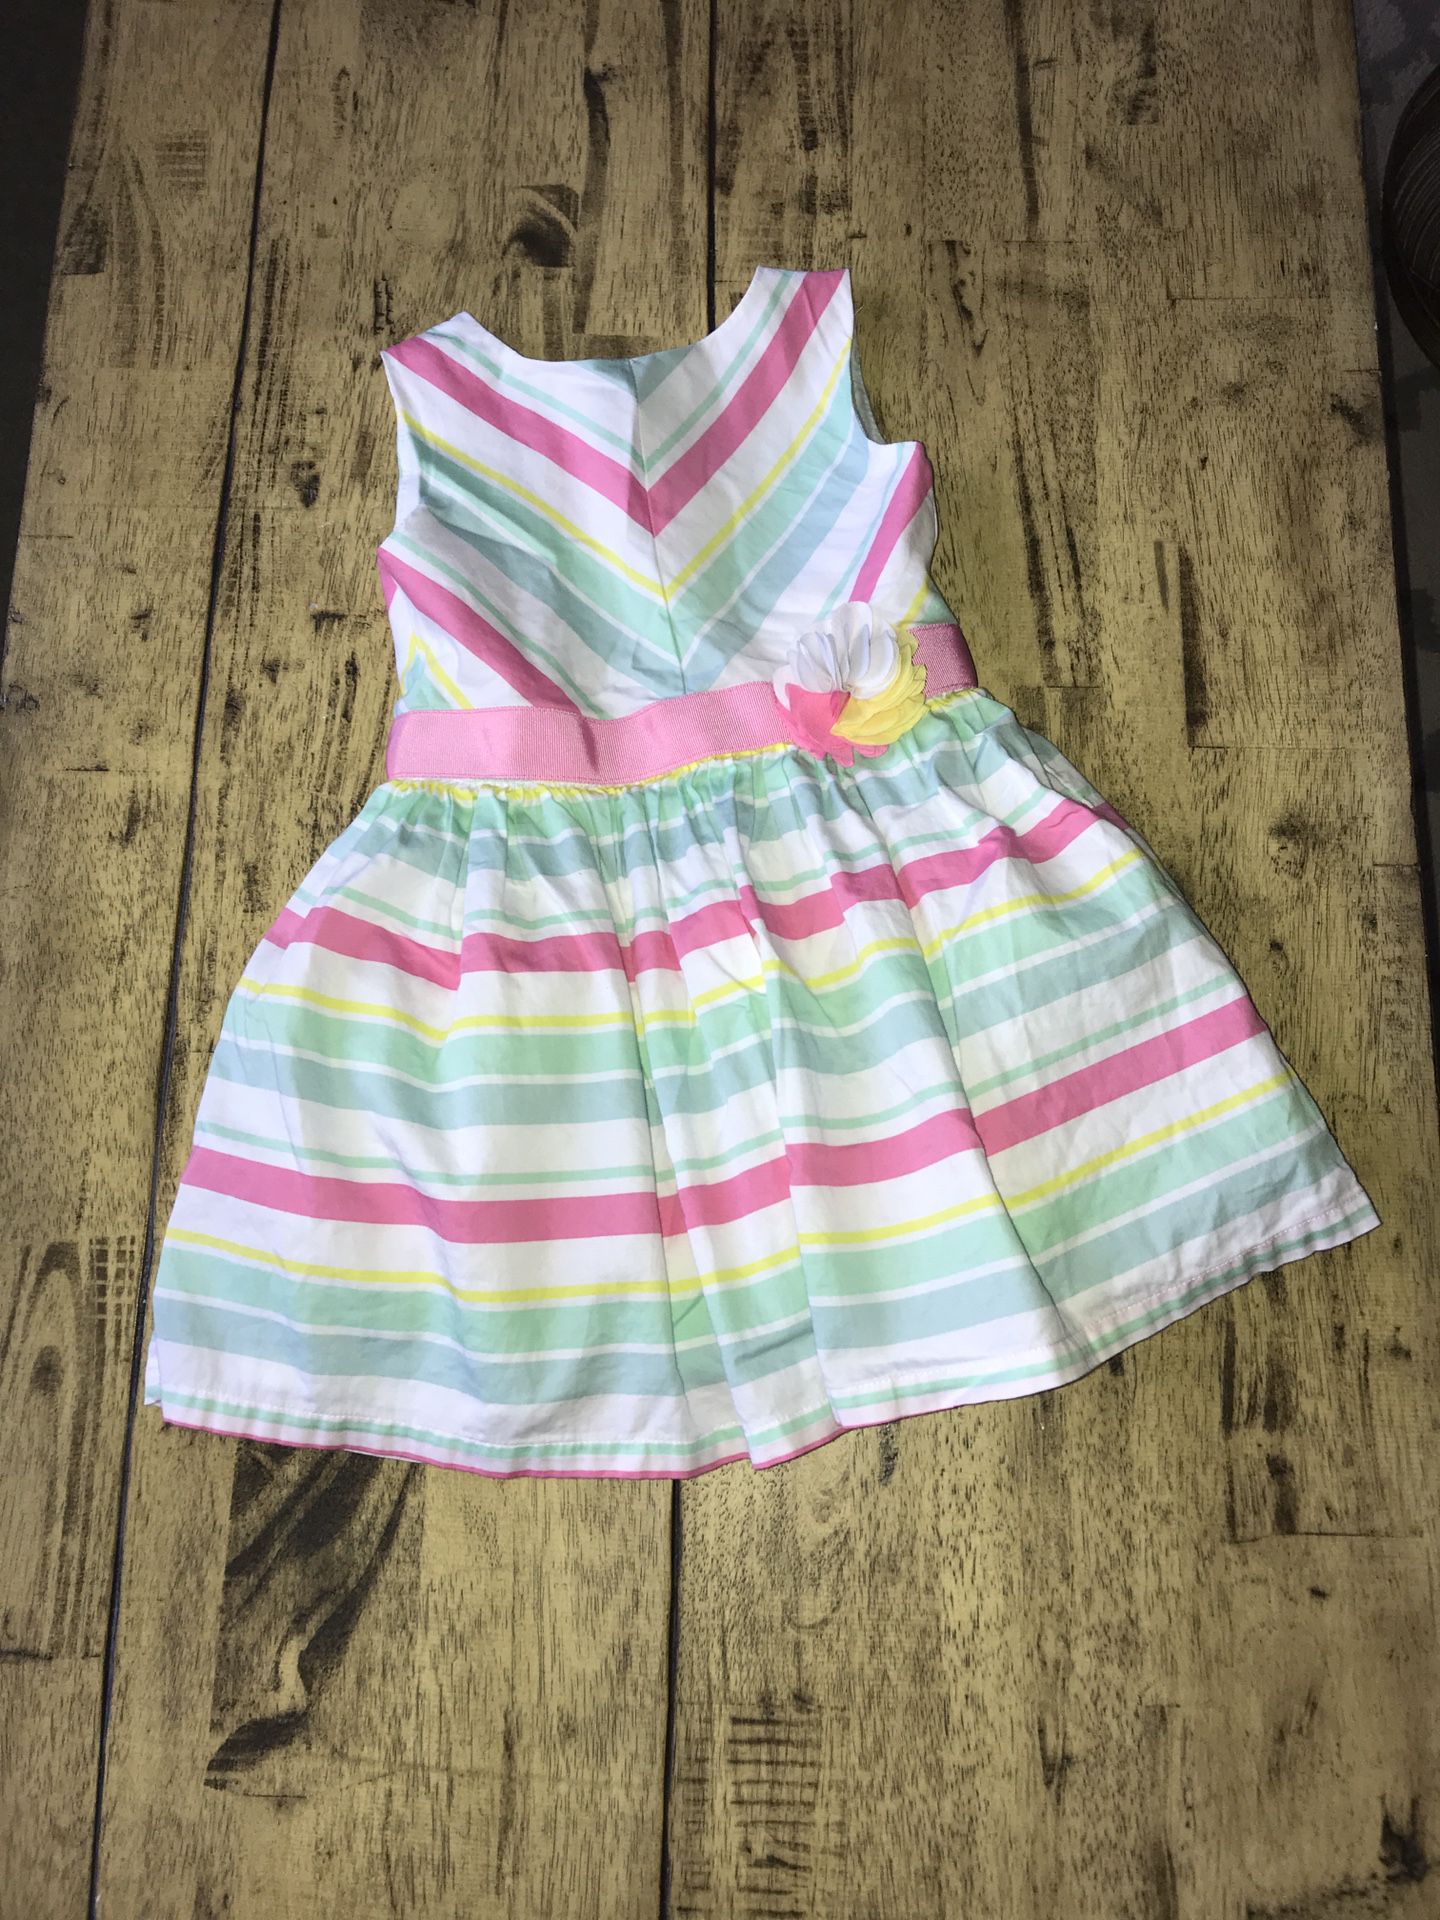 Carter’s Toddler size 2T sleeveless dress